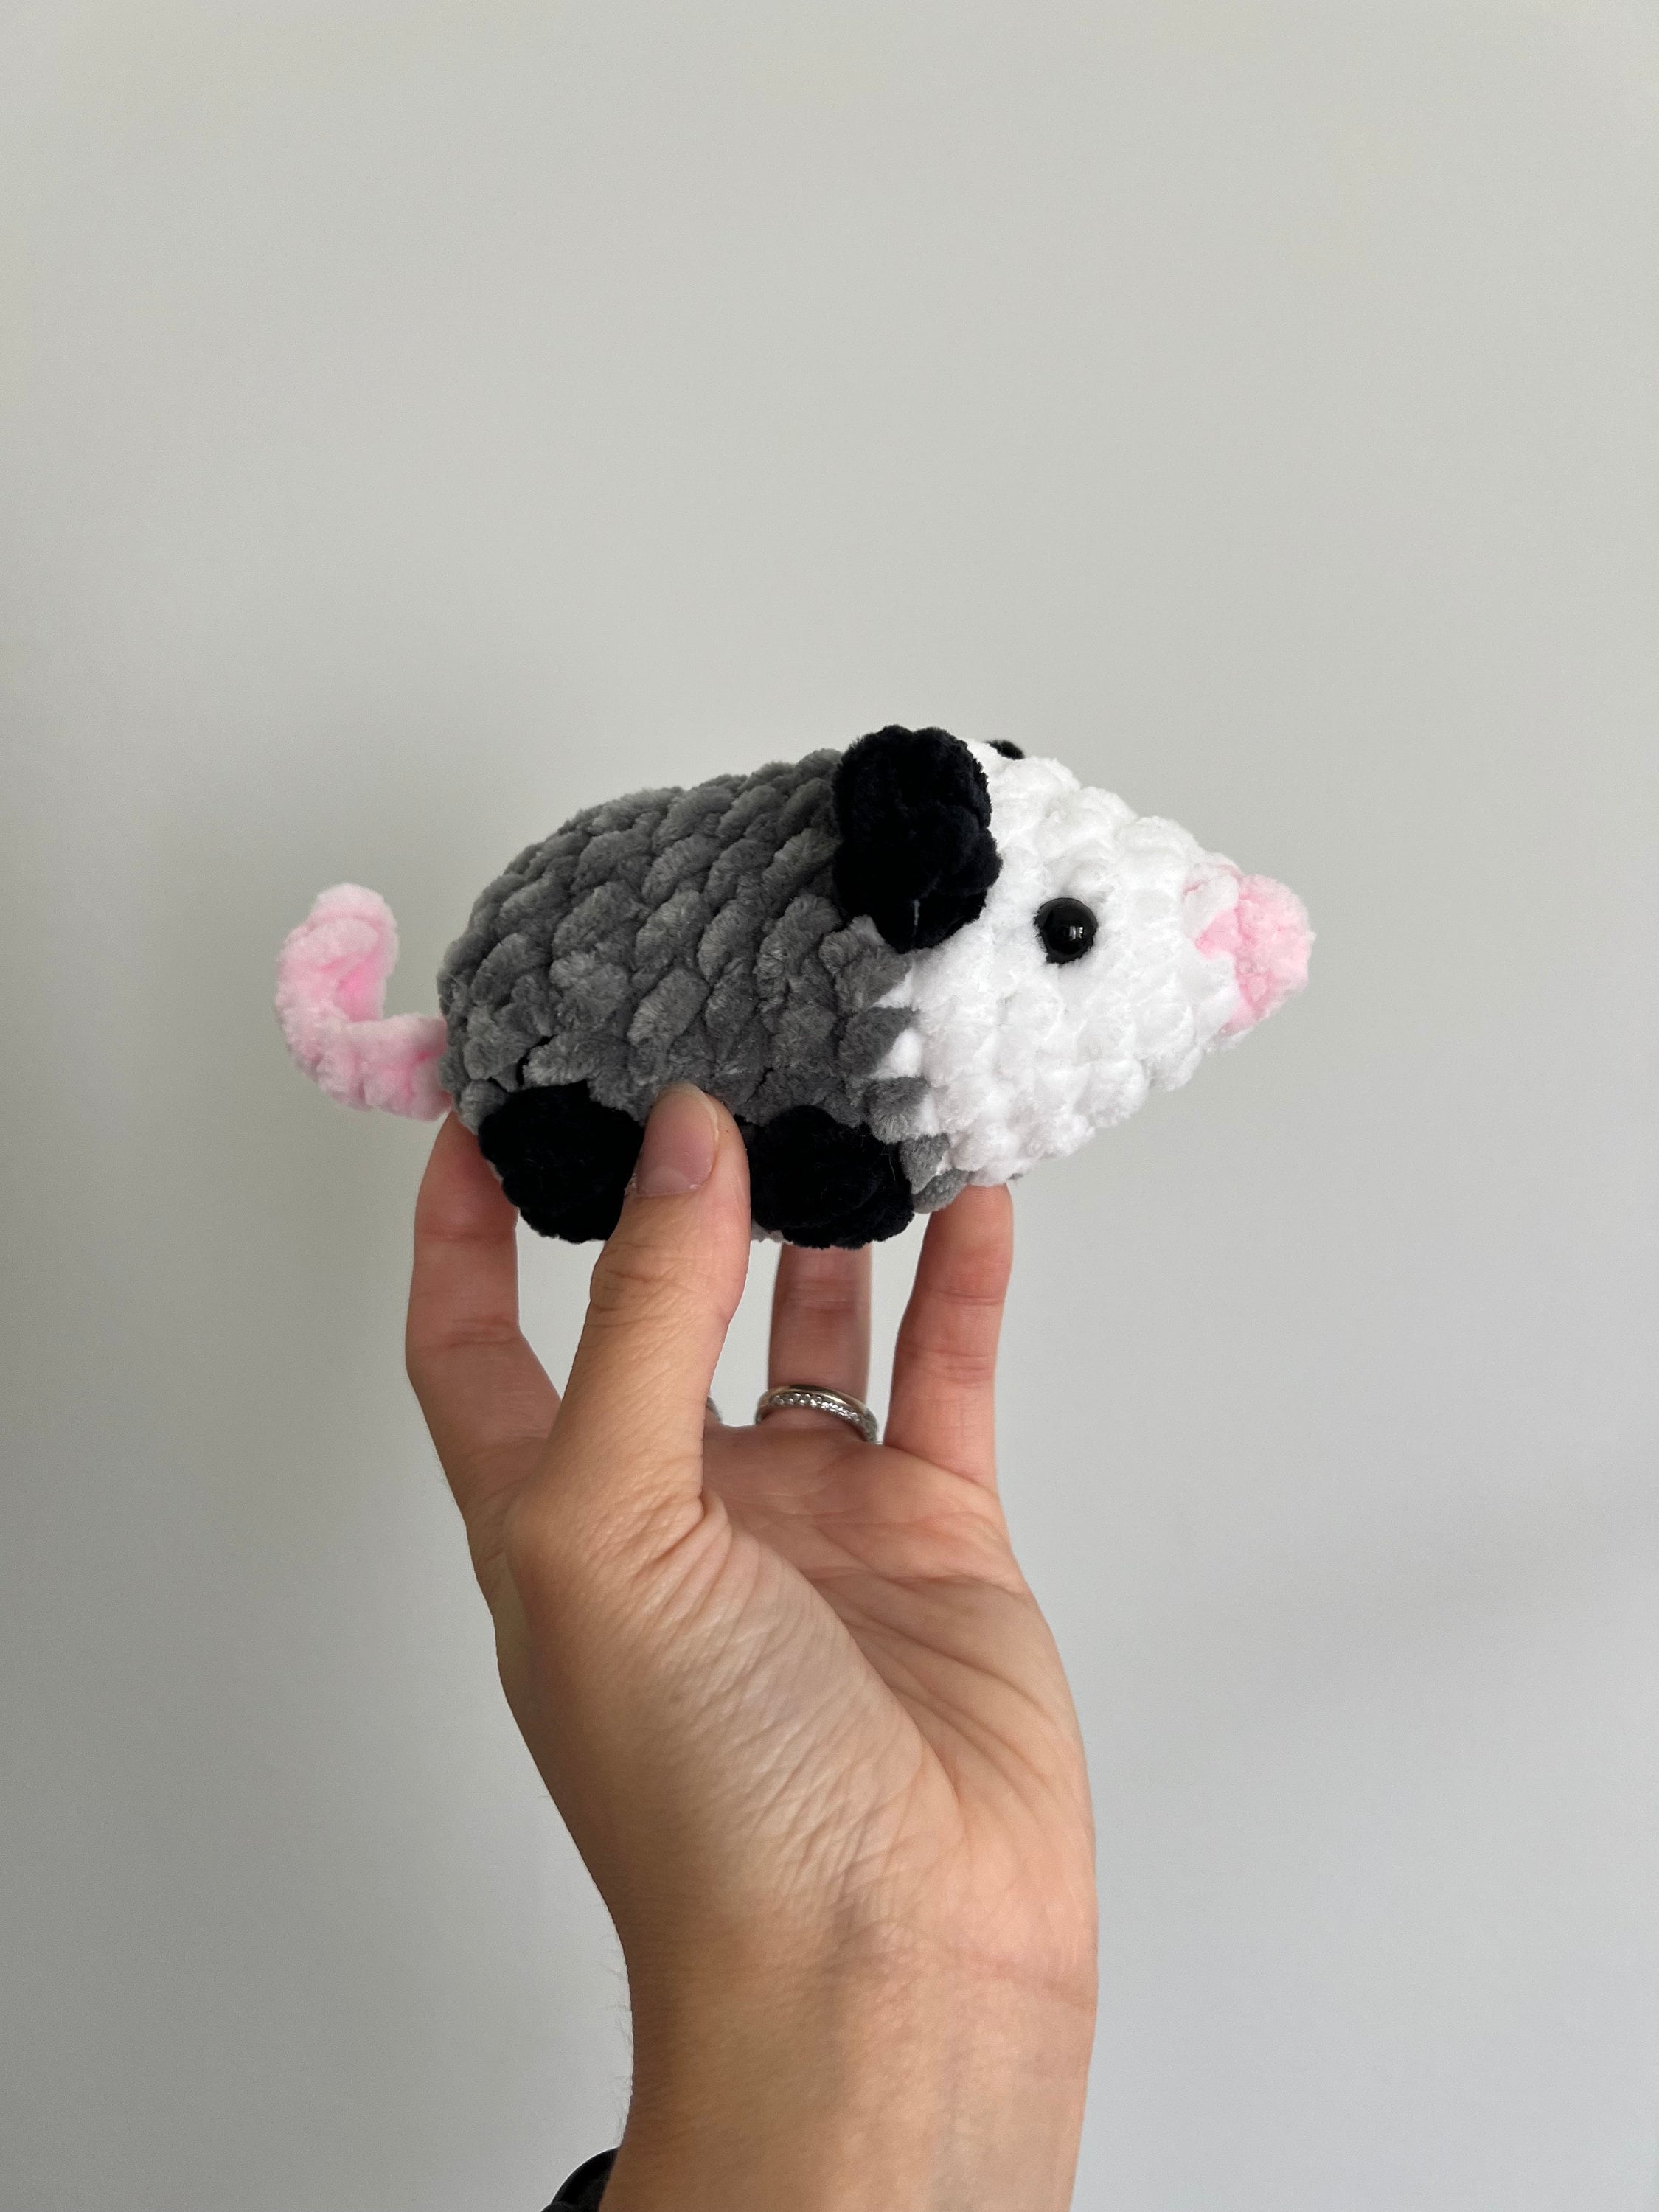 No Sew Opossum: Crochet pattern